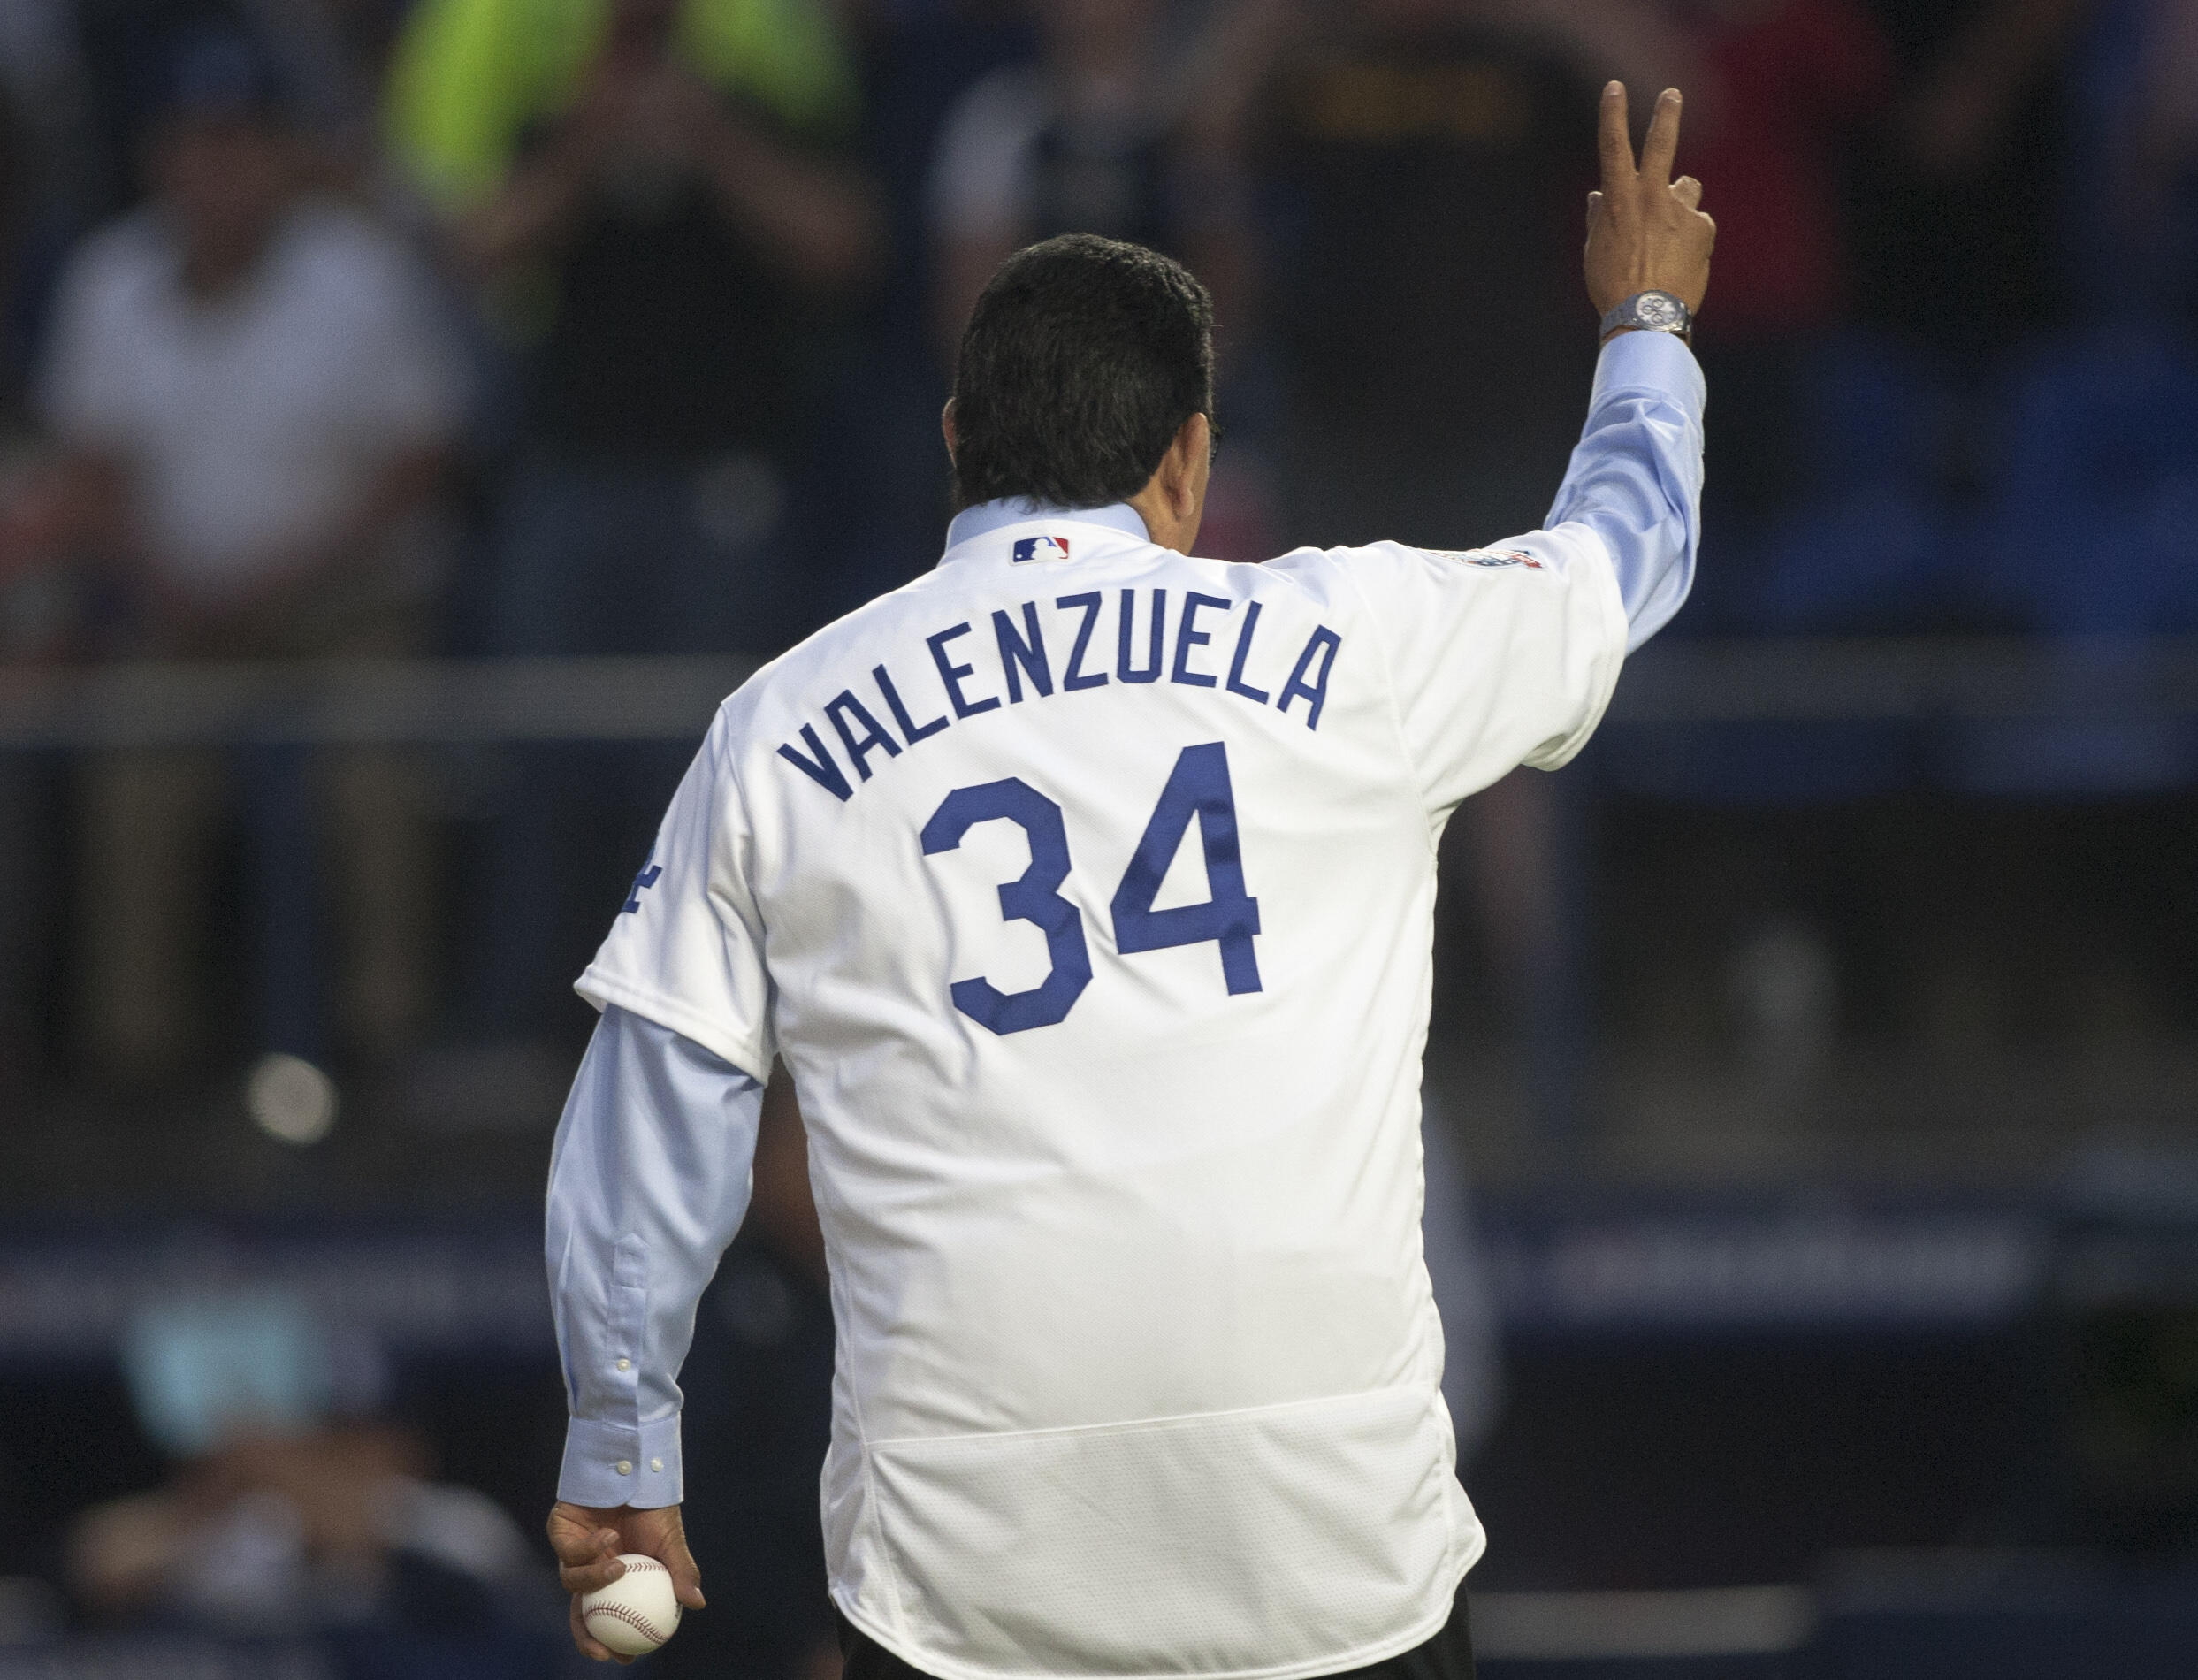 Player of the Week: Fernando Valenzuela – Pantone 294